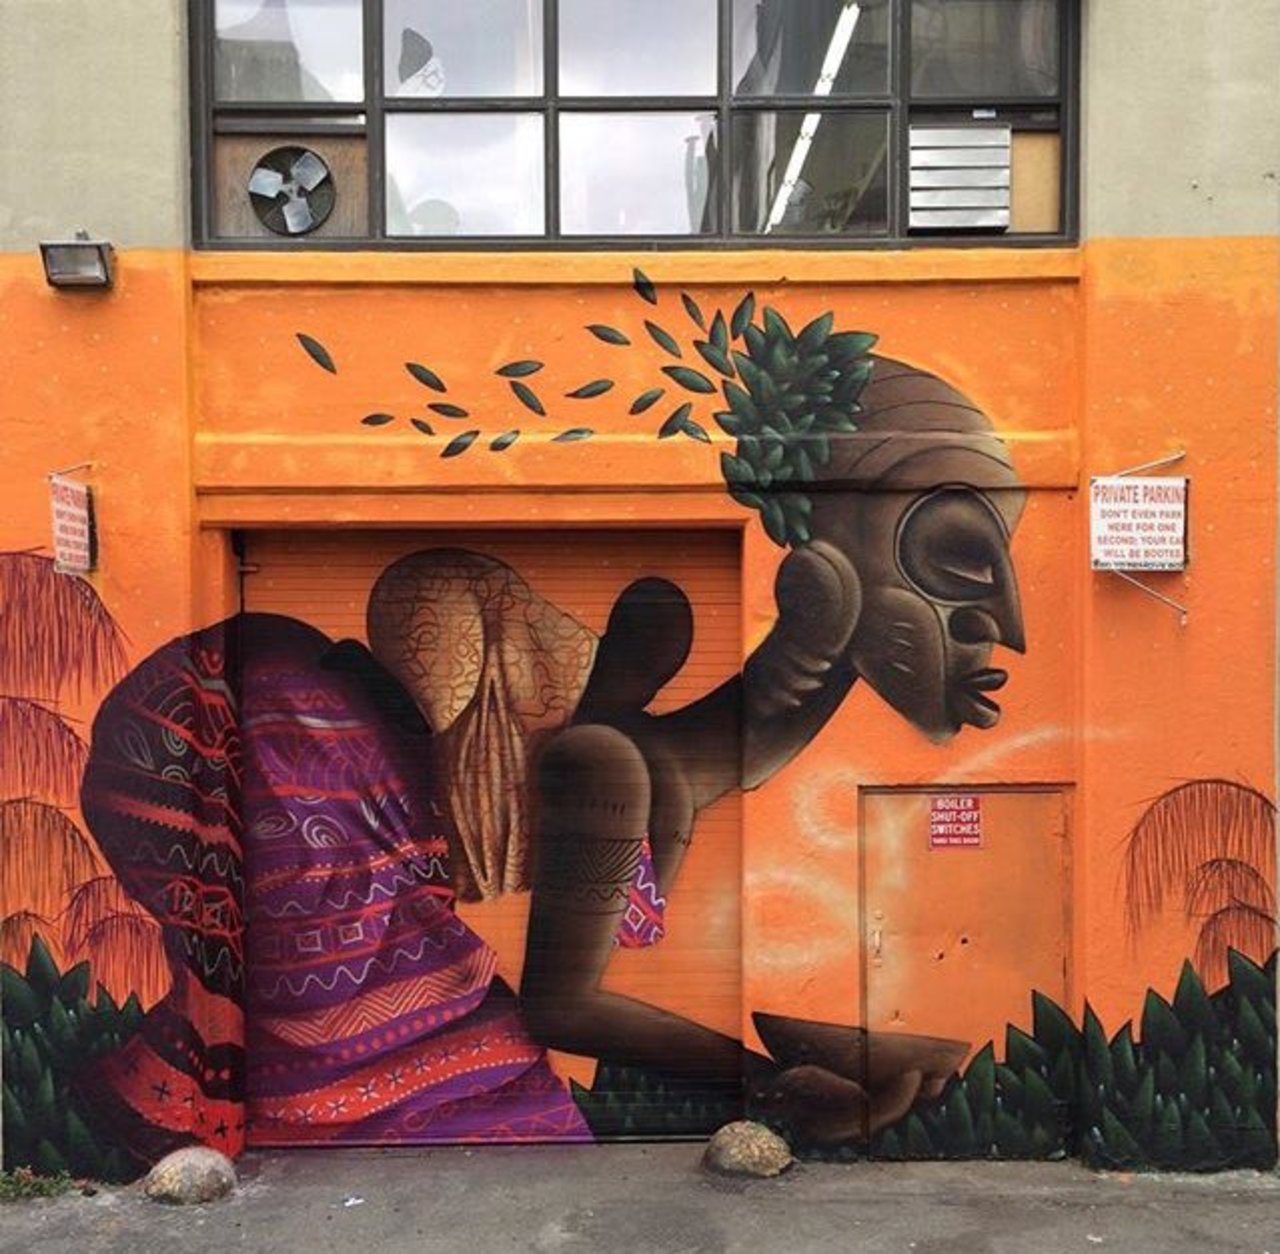 RT @jpaine: New Street Art by Alexandre Keto in NYC 

#art #graffiti #mural #streetart https://t.co/Tb1Ry85tUS